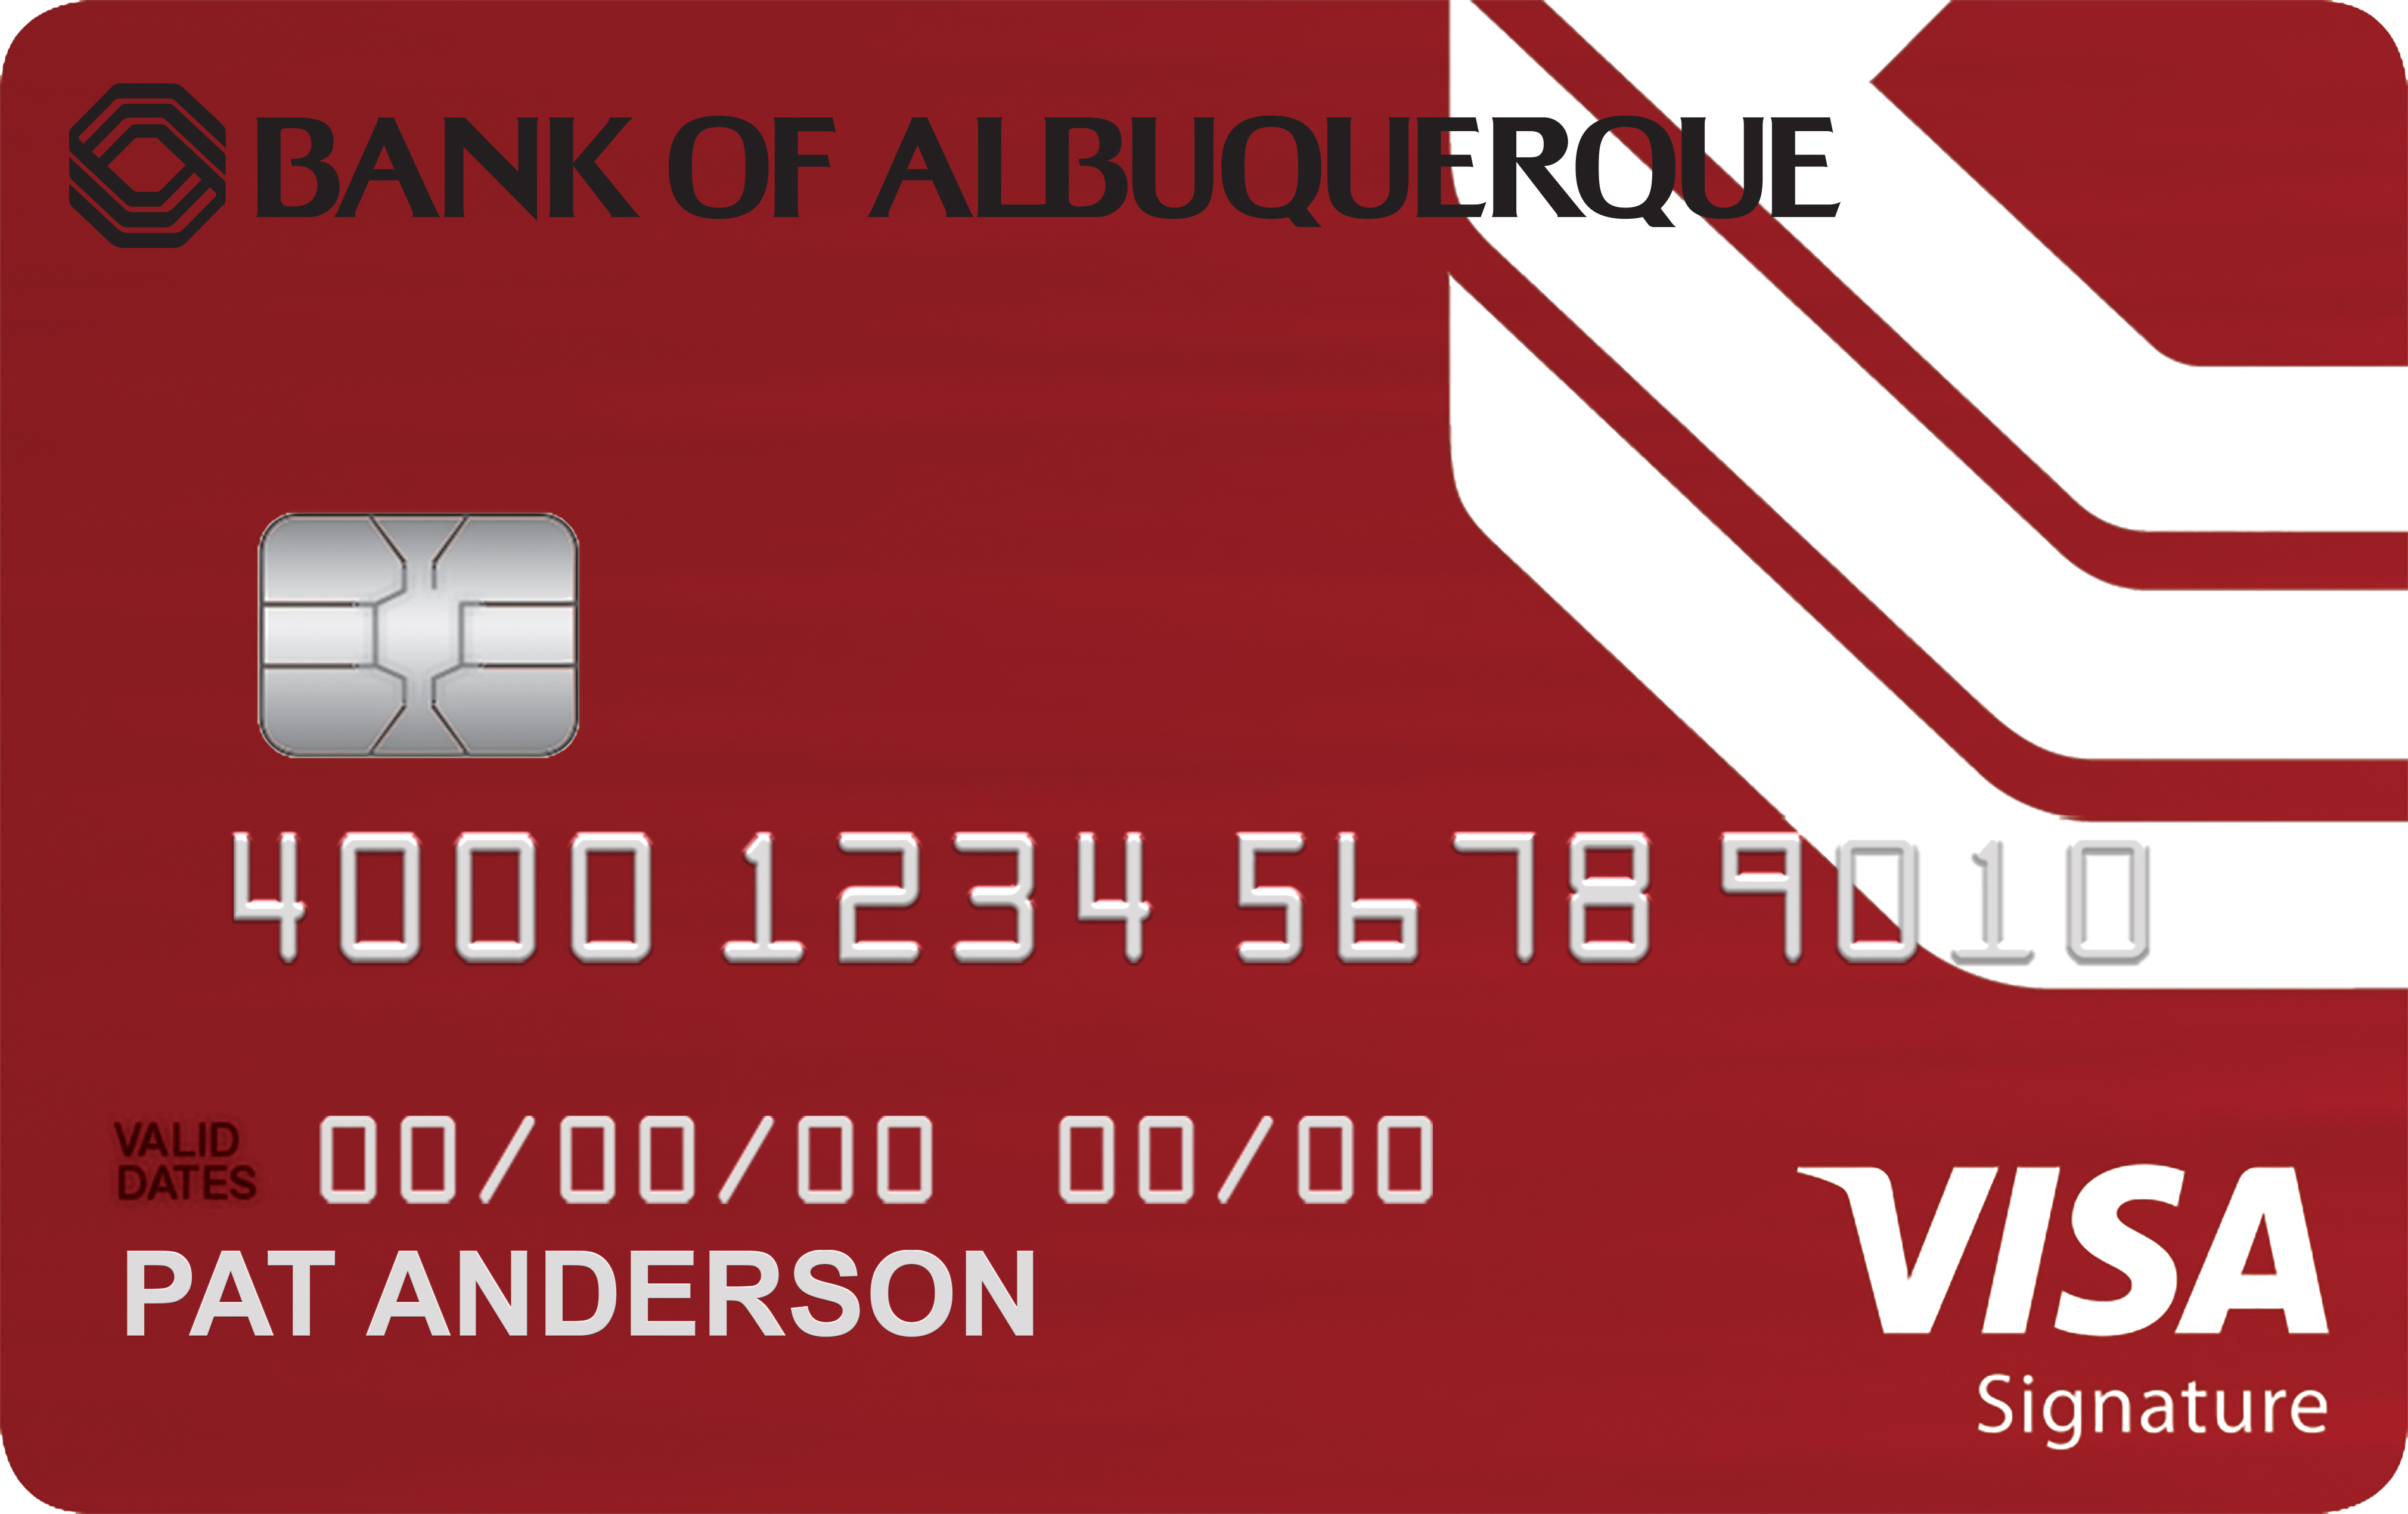 Bank of Albuquerque Travel Rewards+ Card